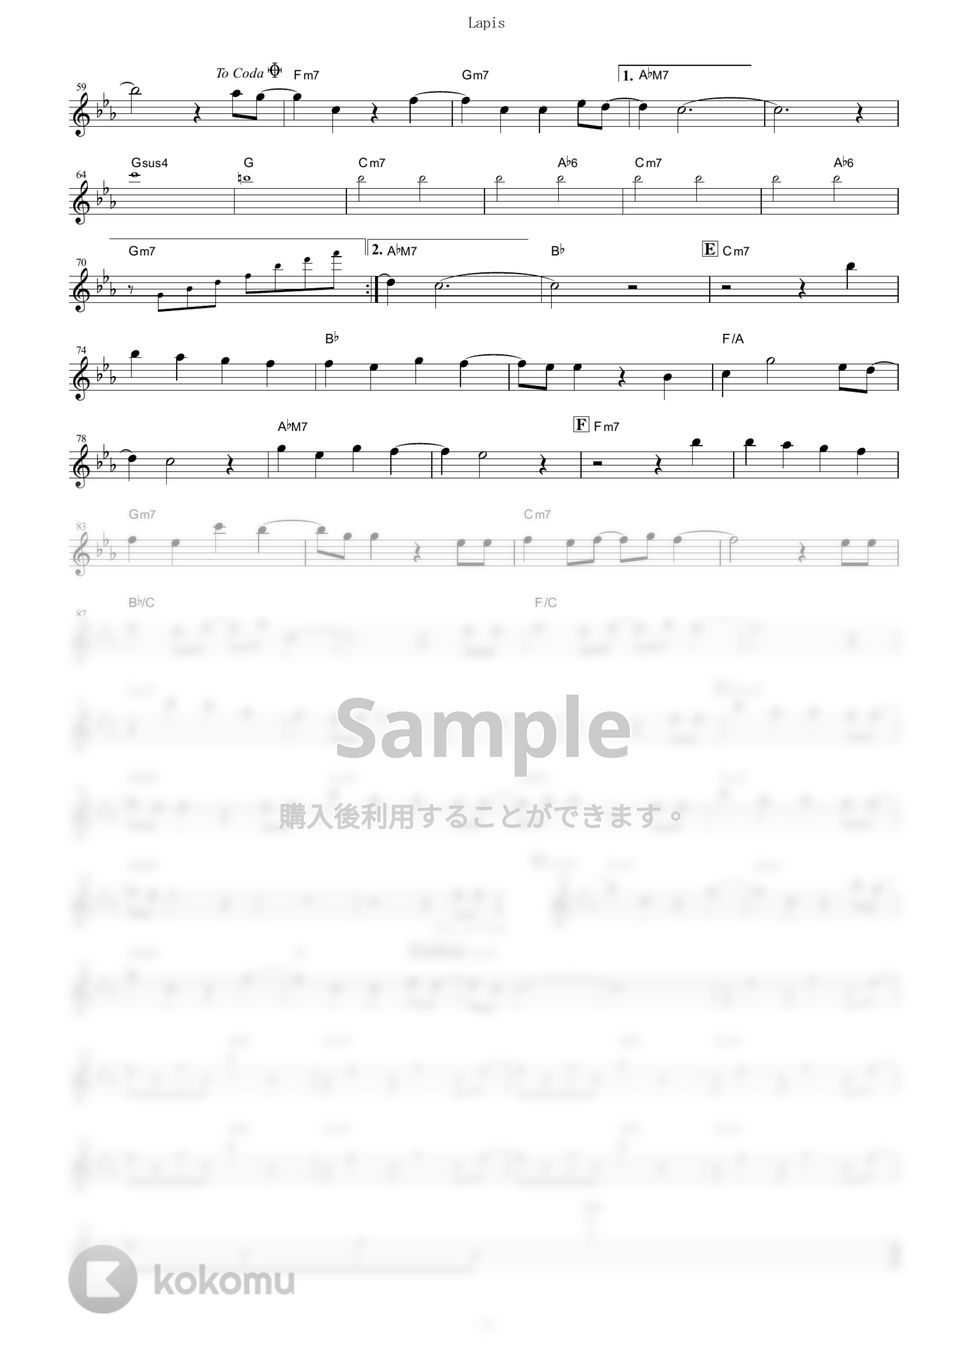 TrySail - Lapis (『マギアレコード 魔法少女まどか☆マギカ外伝 2nd SEASON -覚醒前夜-』 / in Eb) by muta-sax